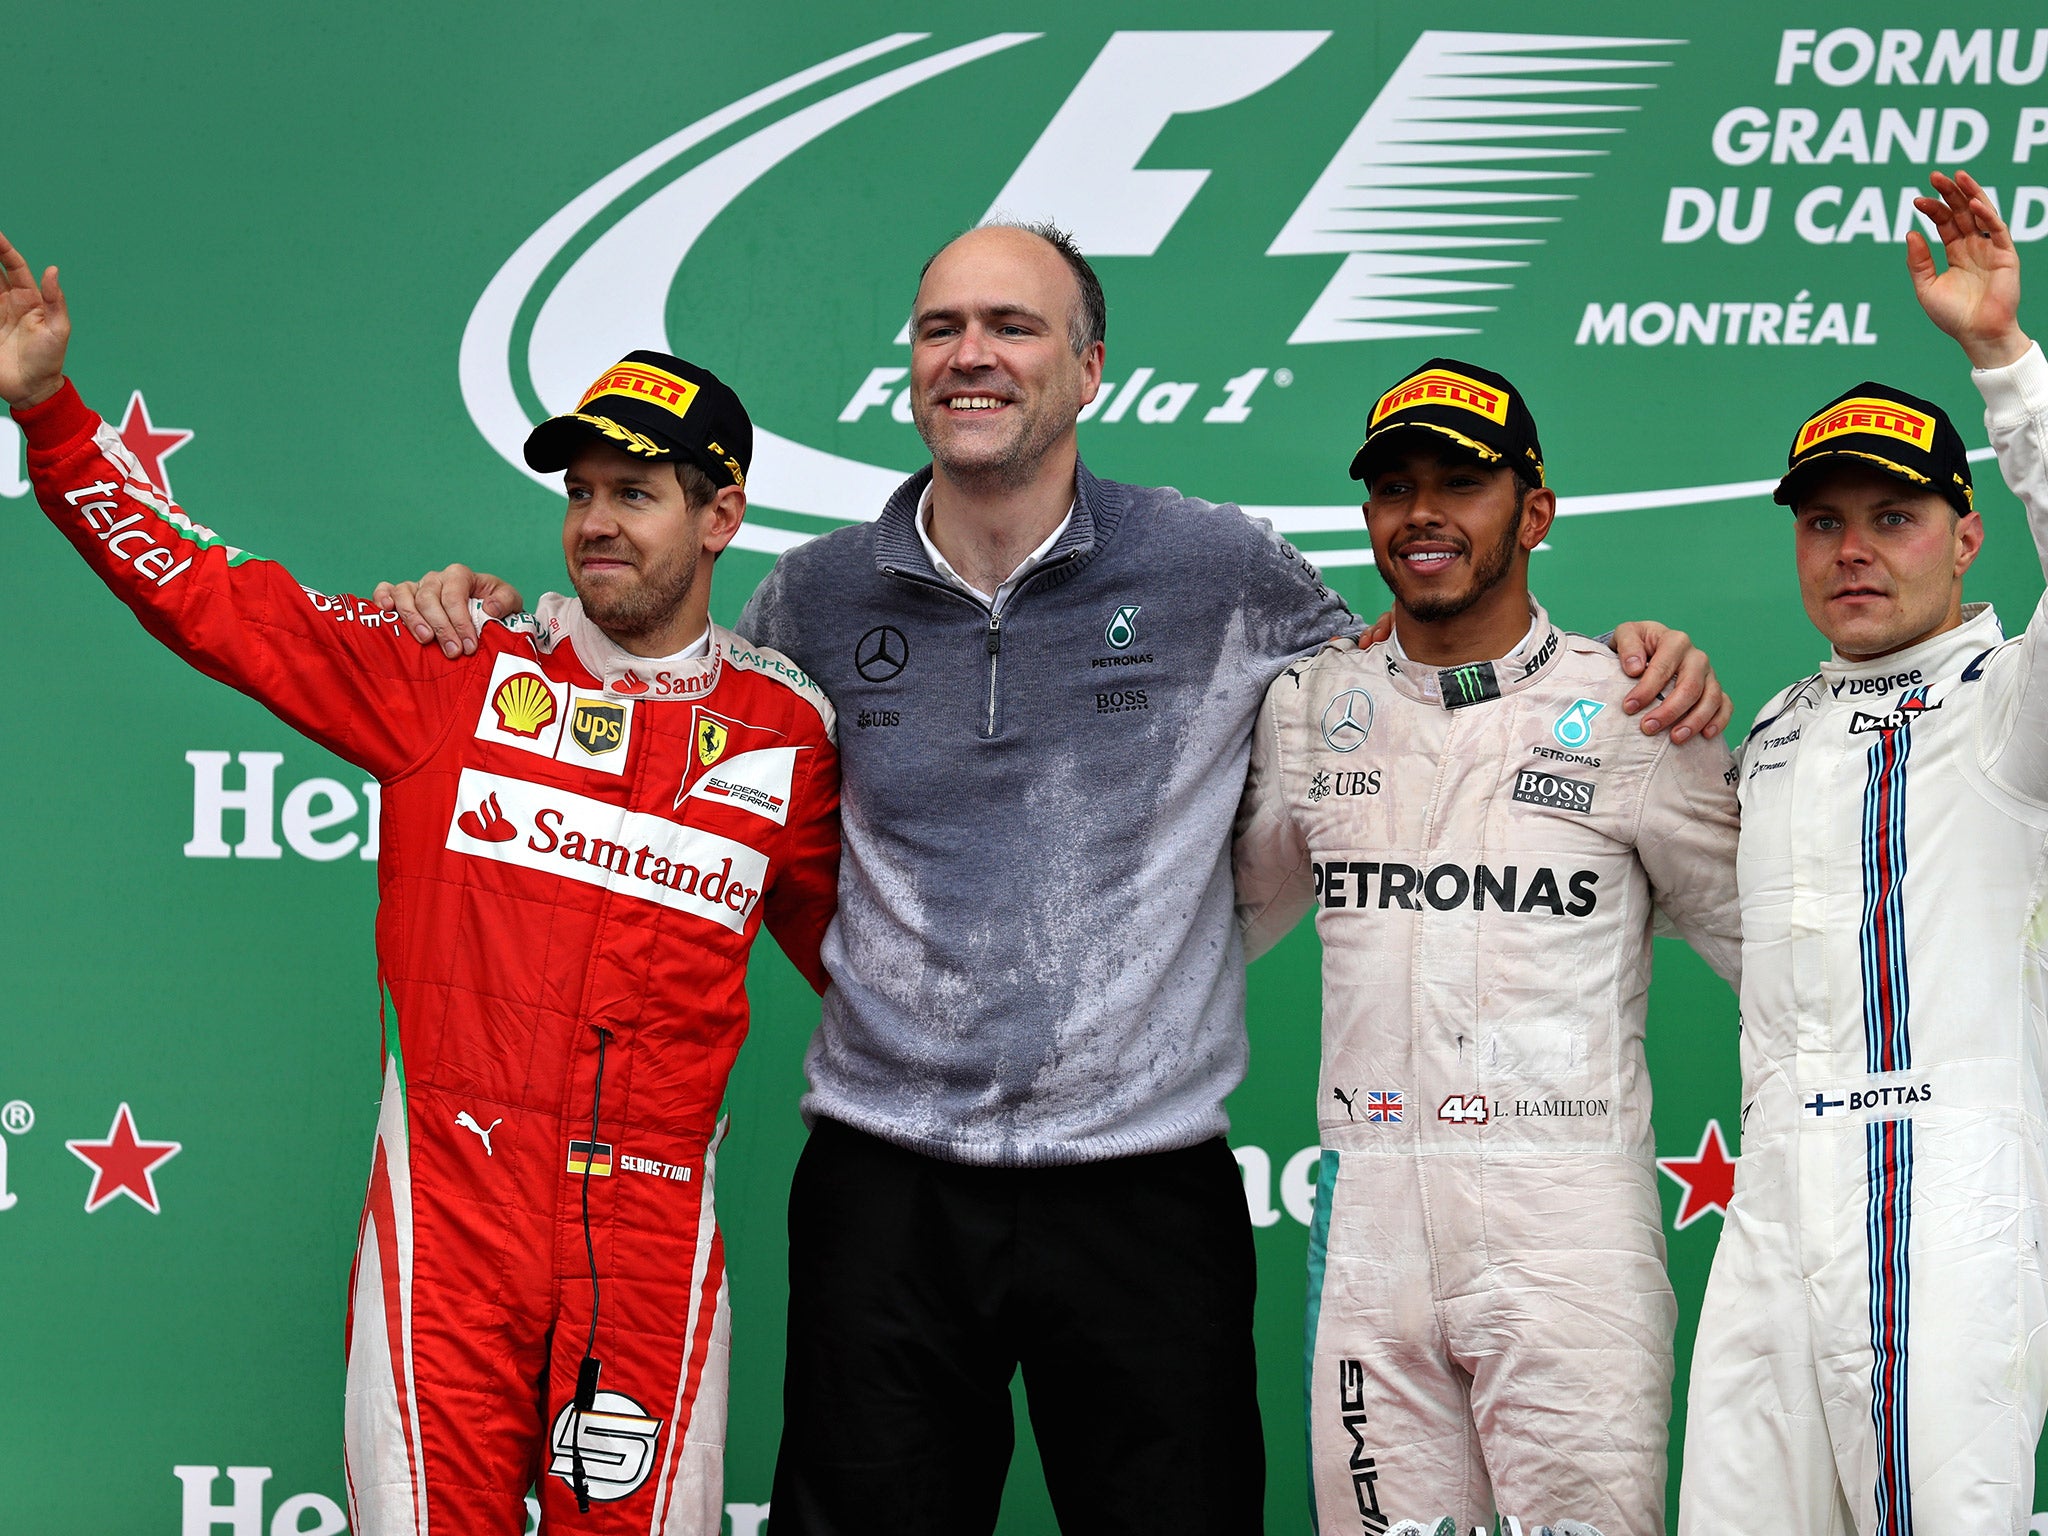 &#13;
Hamilton celebrates on the podium alongside Vettel (left) and Bottas (right) &#13;